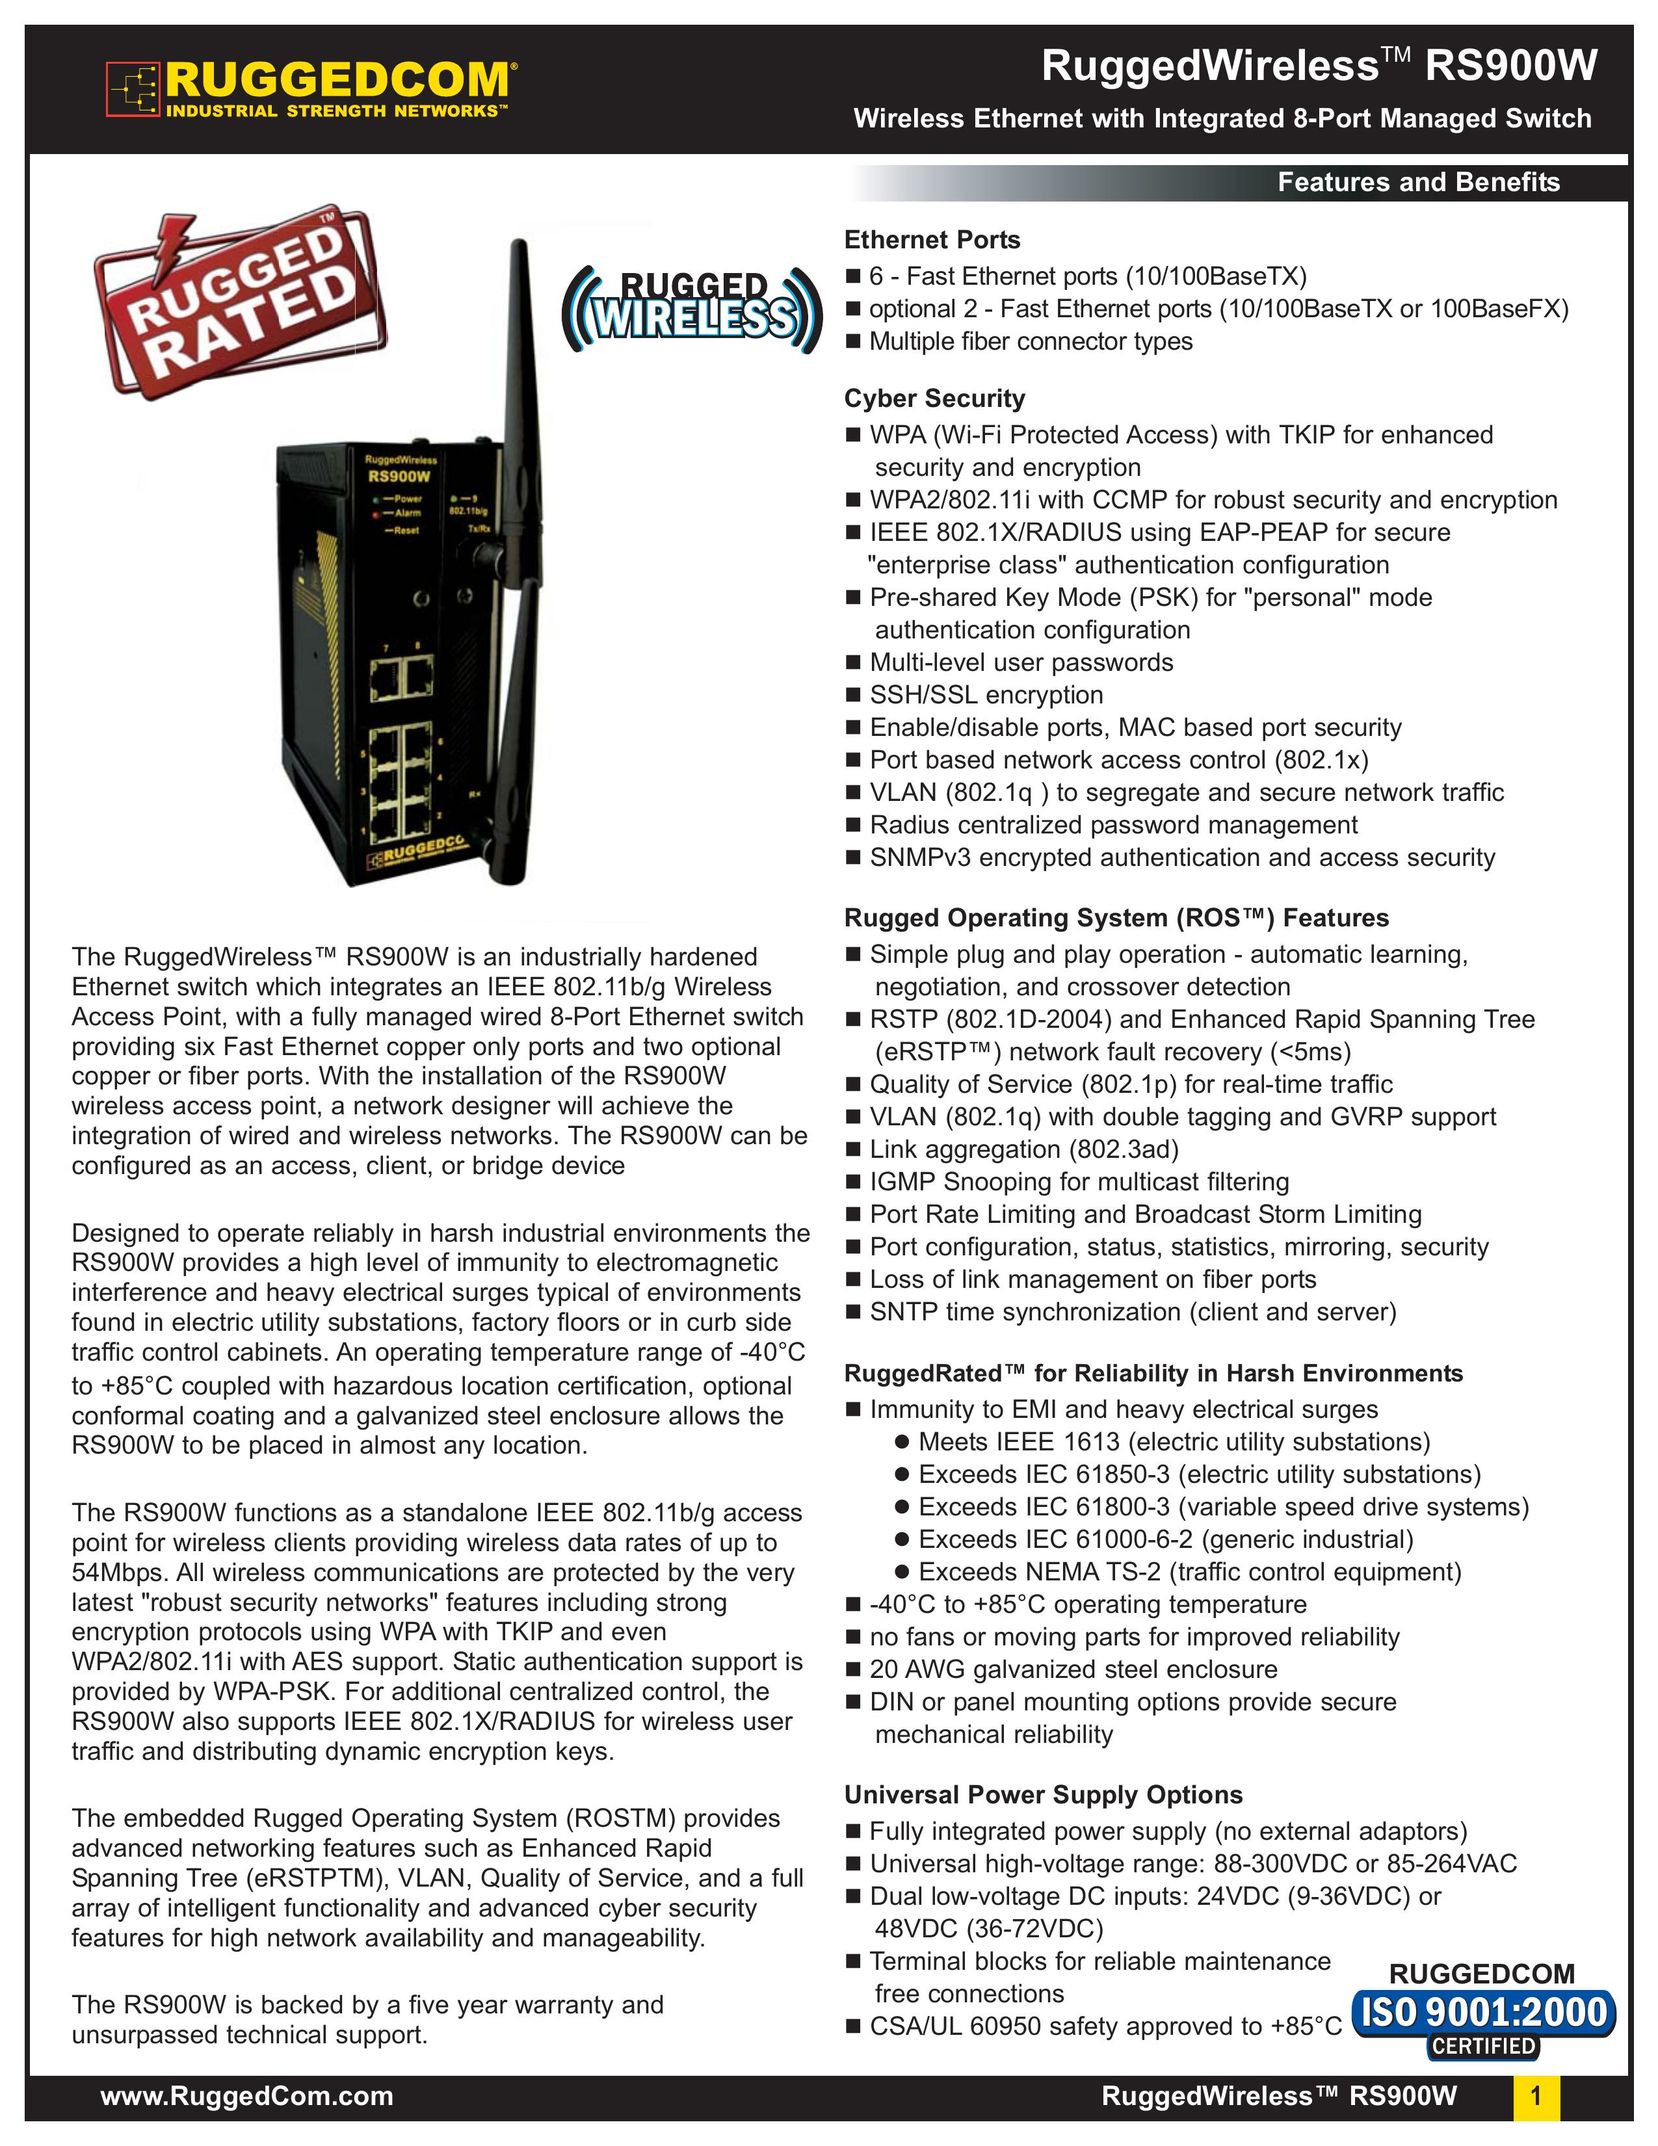 RuggedCom RS900W Switch User Manual